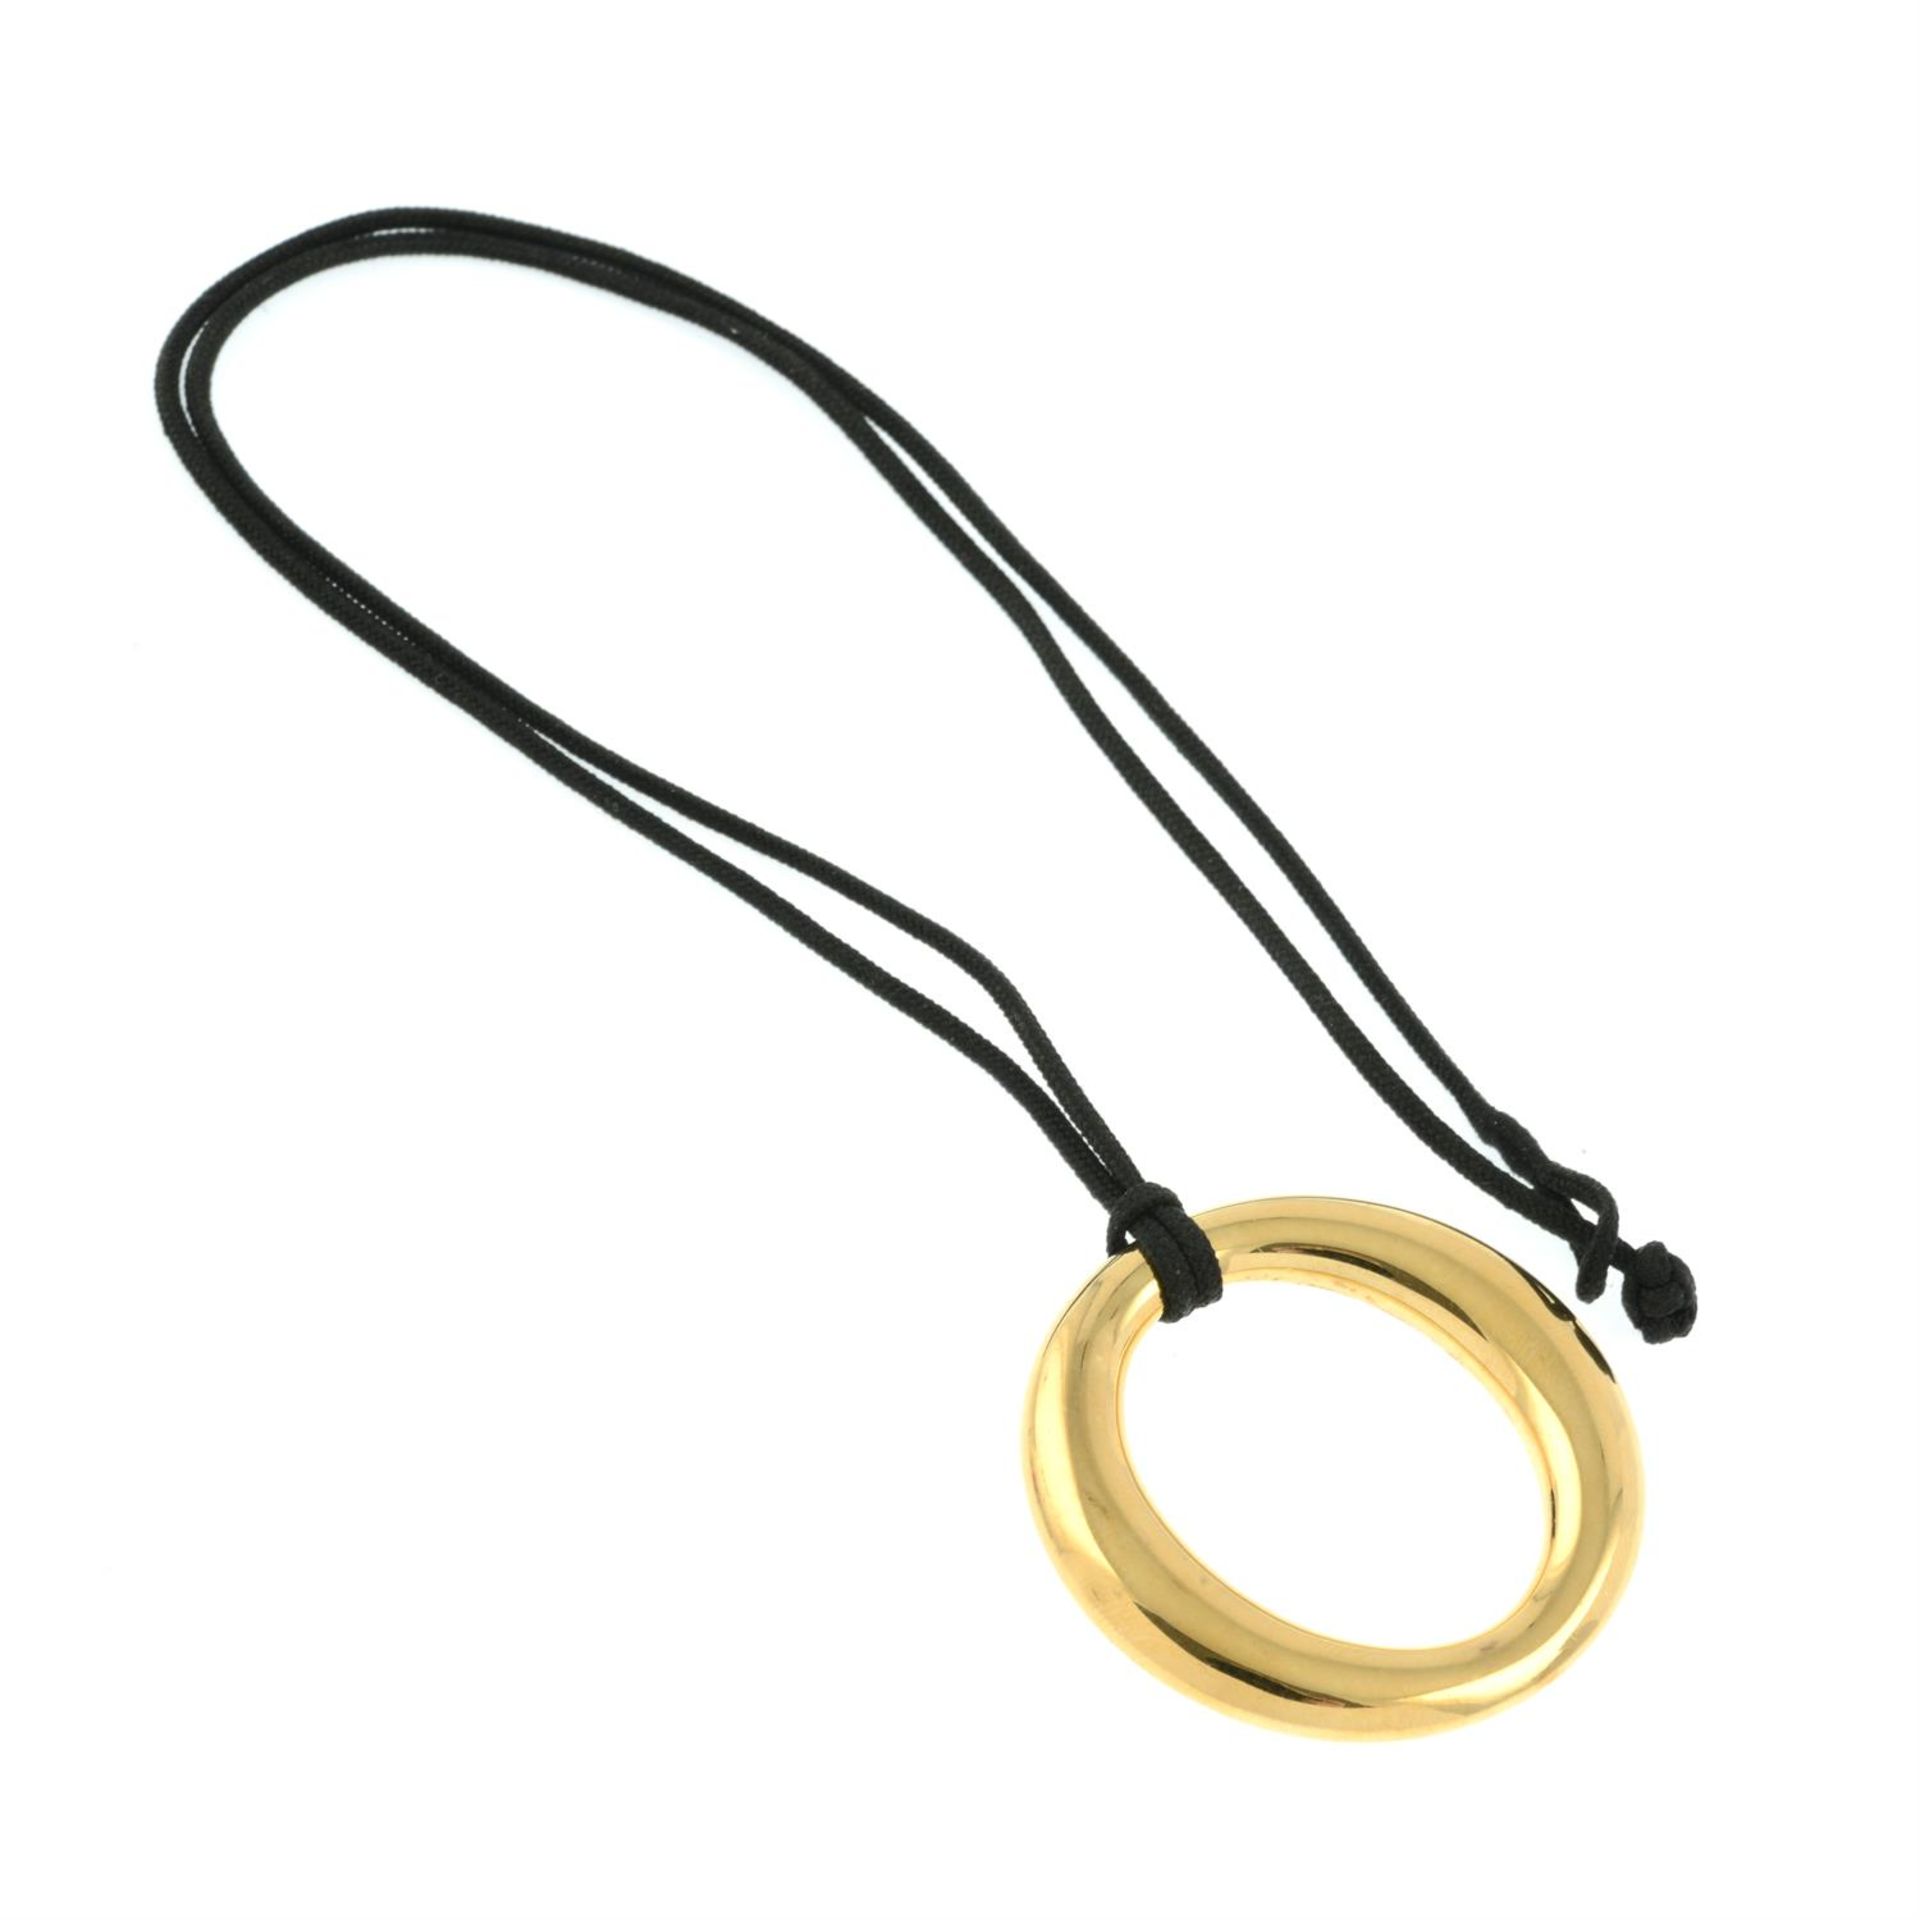 A 'Sevillana' pendant, on black cord, by Elsa Peretti for Tiffany & Co. - Image 5 of 6